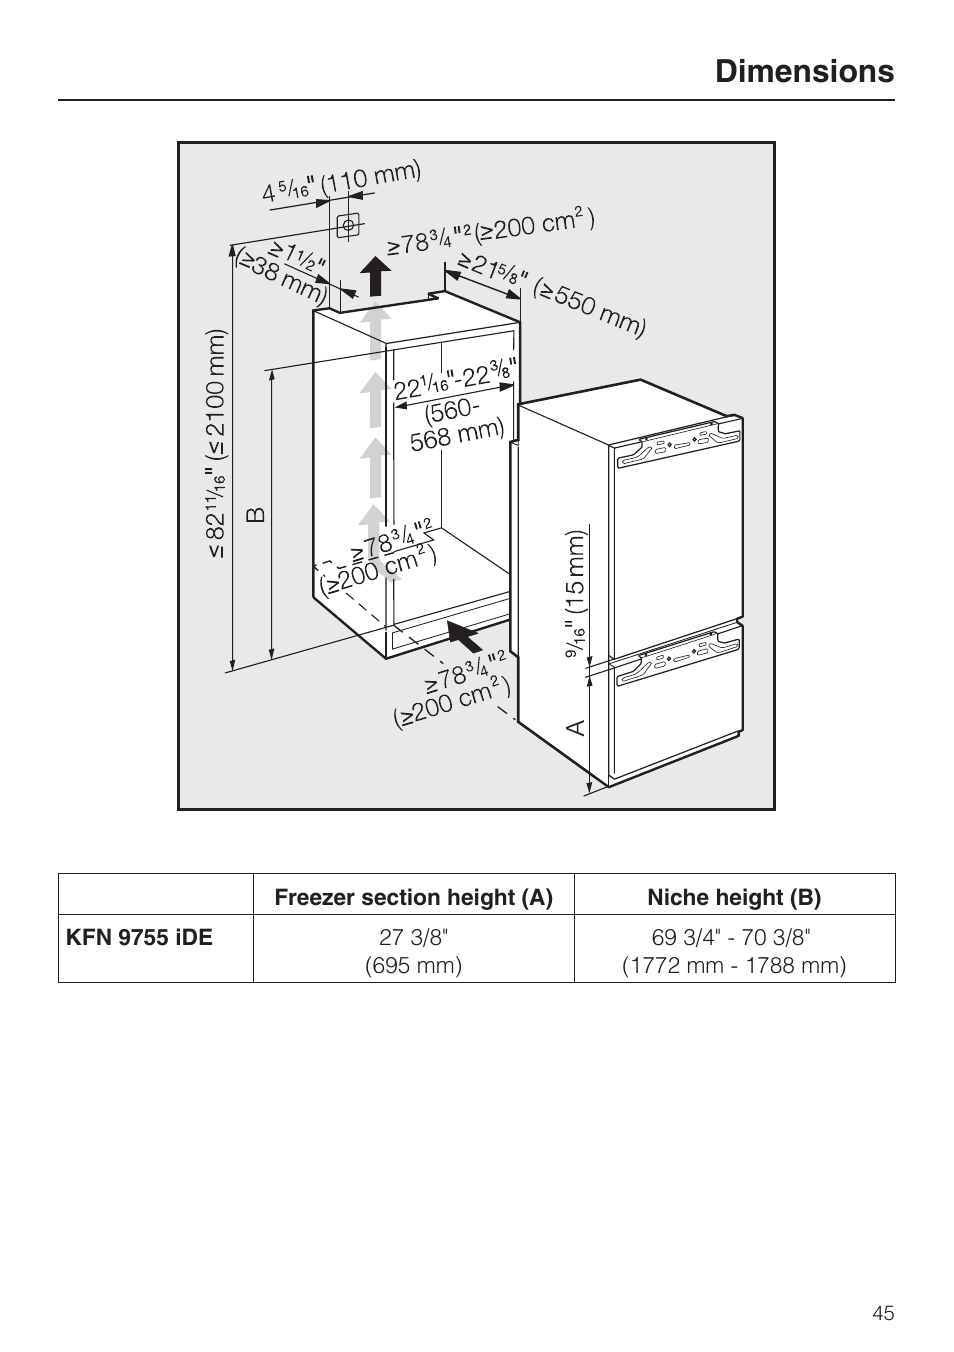 Dimensions 45, Dimensions | Miele KFN 9755 iDE EN User Manual | Page 45 / 60